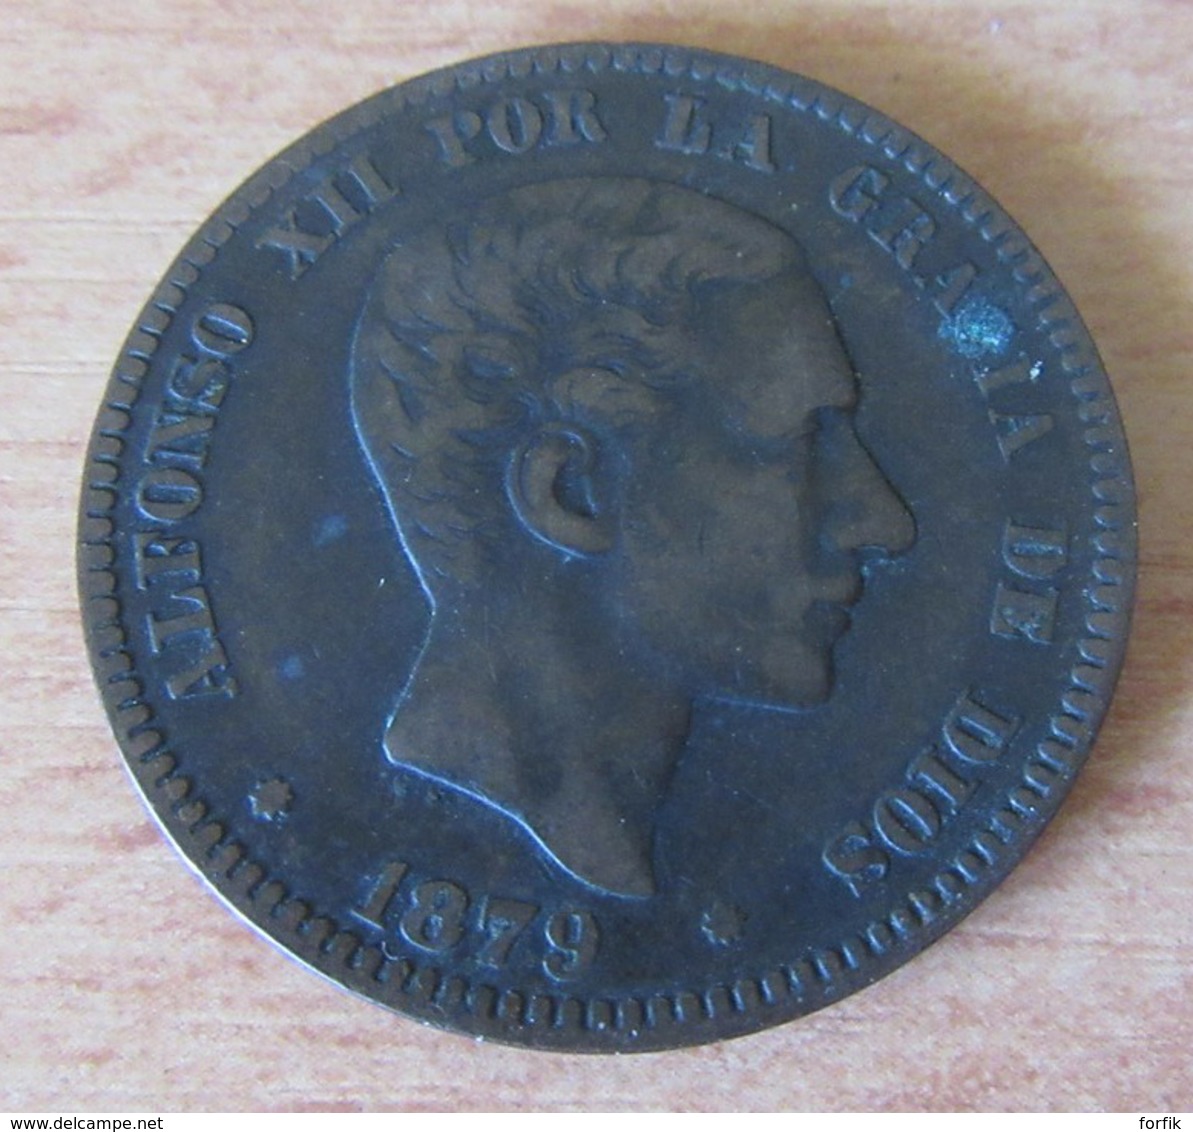 Espagne / Espana - Monnaie Diez (10) Centimos Alfonso XII 1879 OM - Premières Frappes